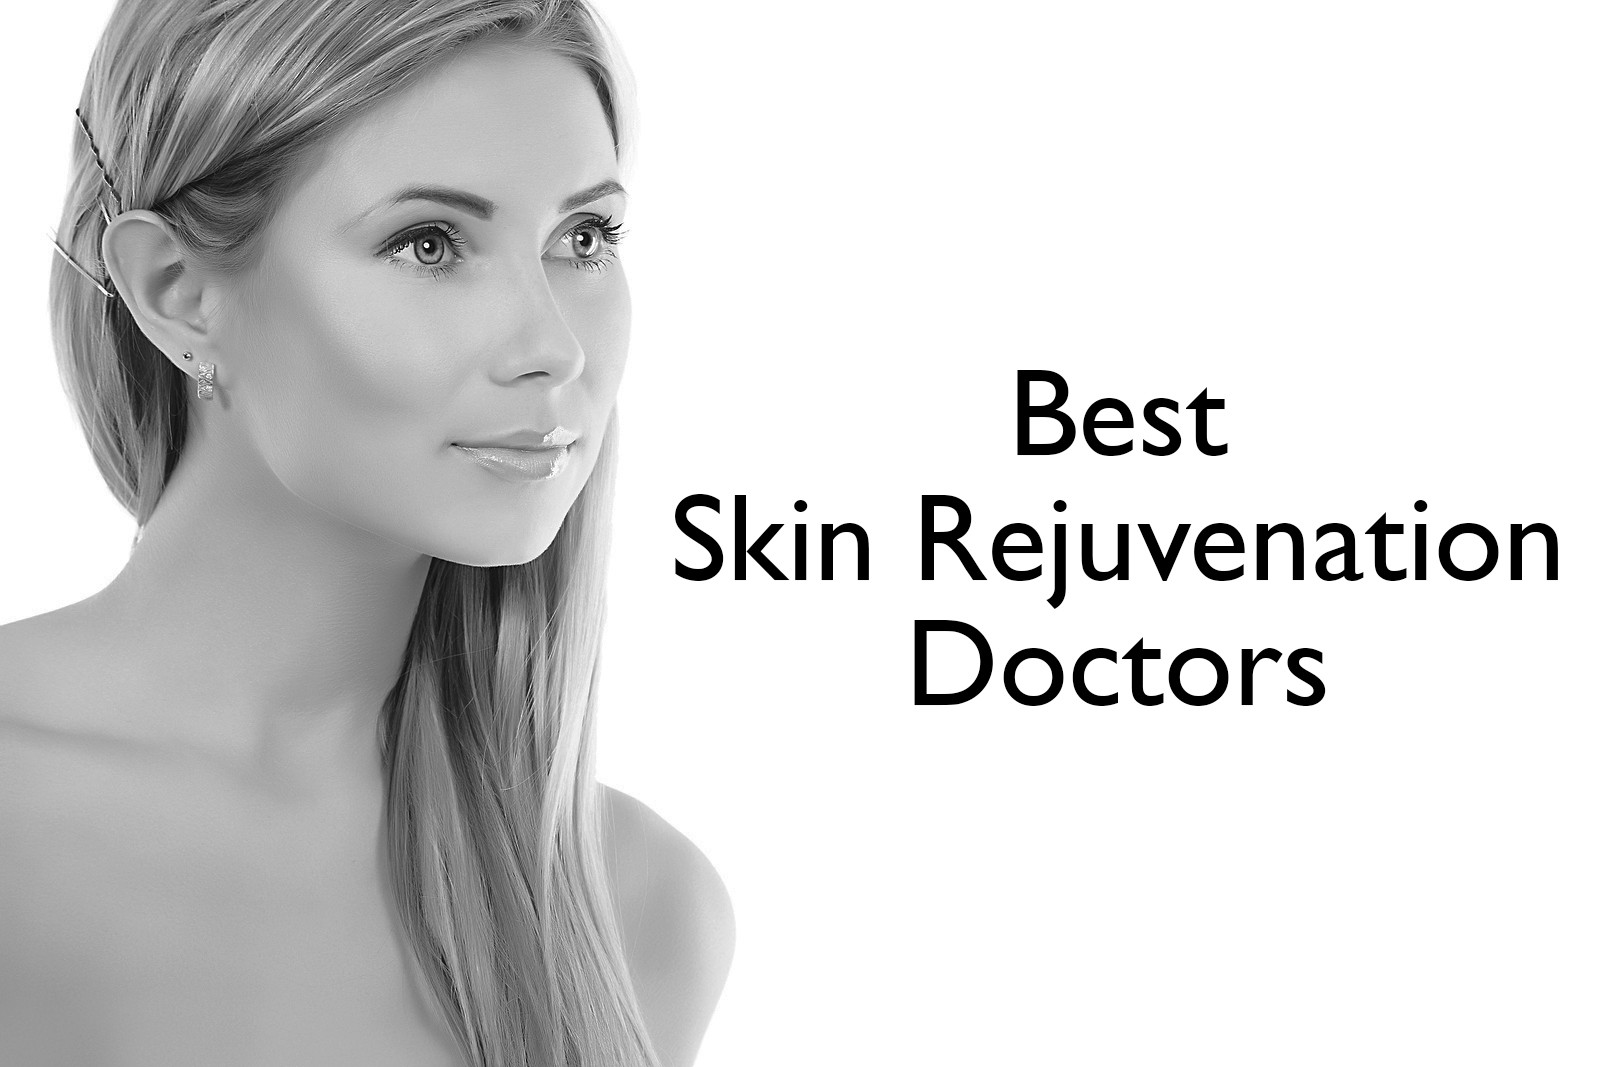 Best skin rejuvenation doctors in San Diego